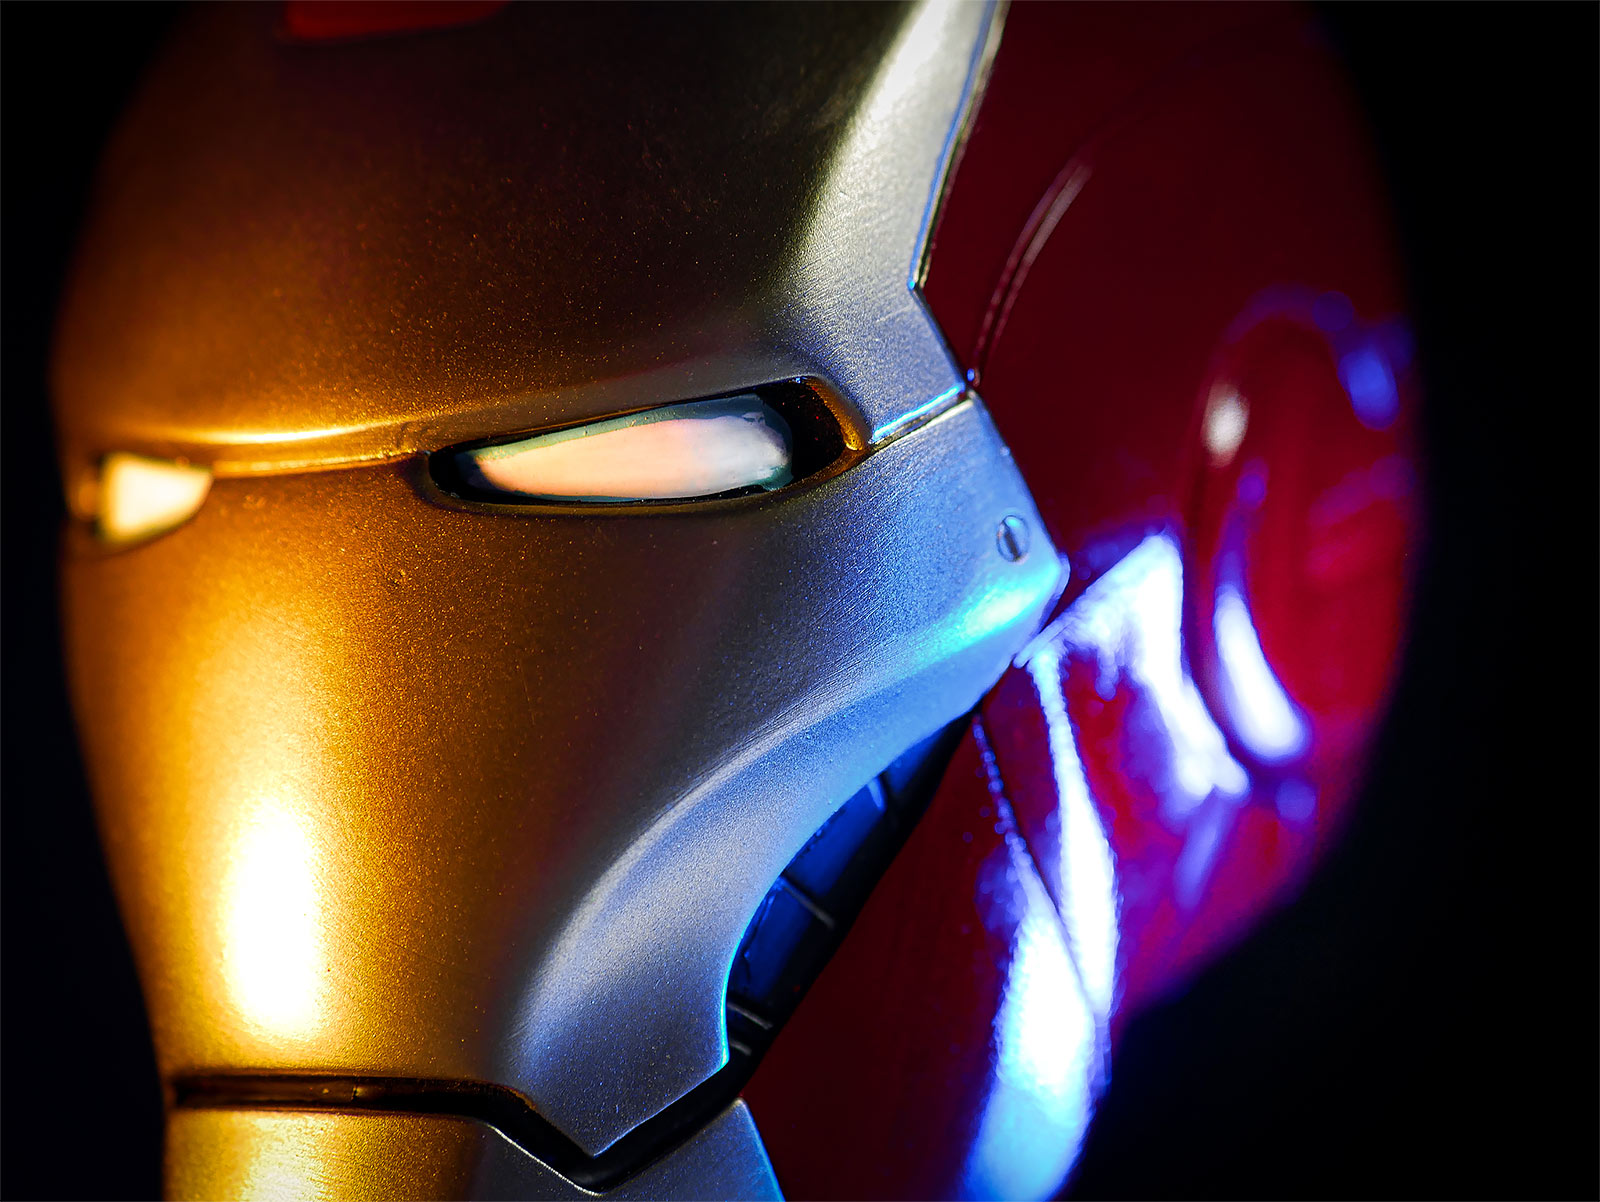 Iron Man - Mark VII Helm Replik Marvel Museum Collection